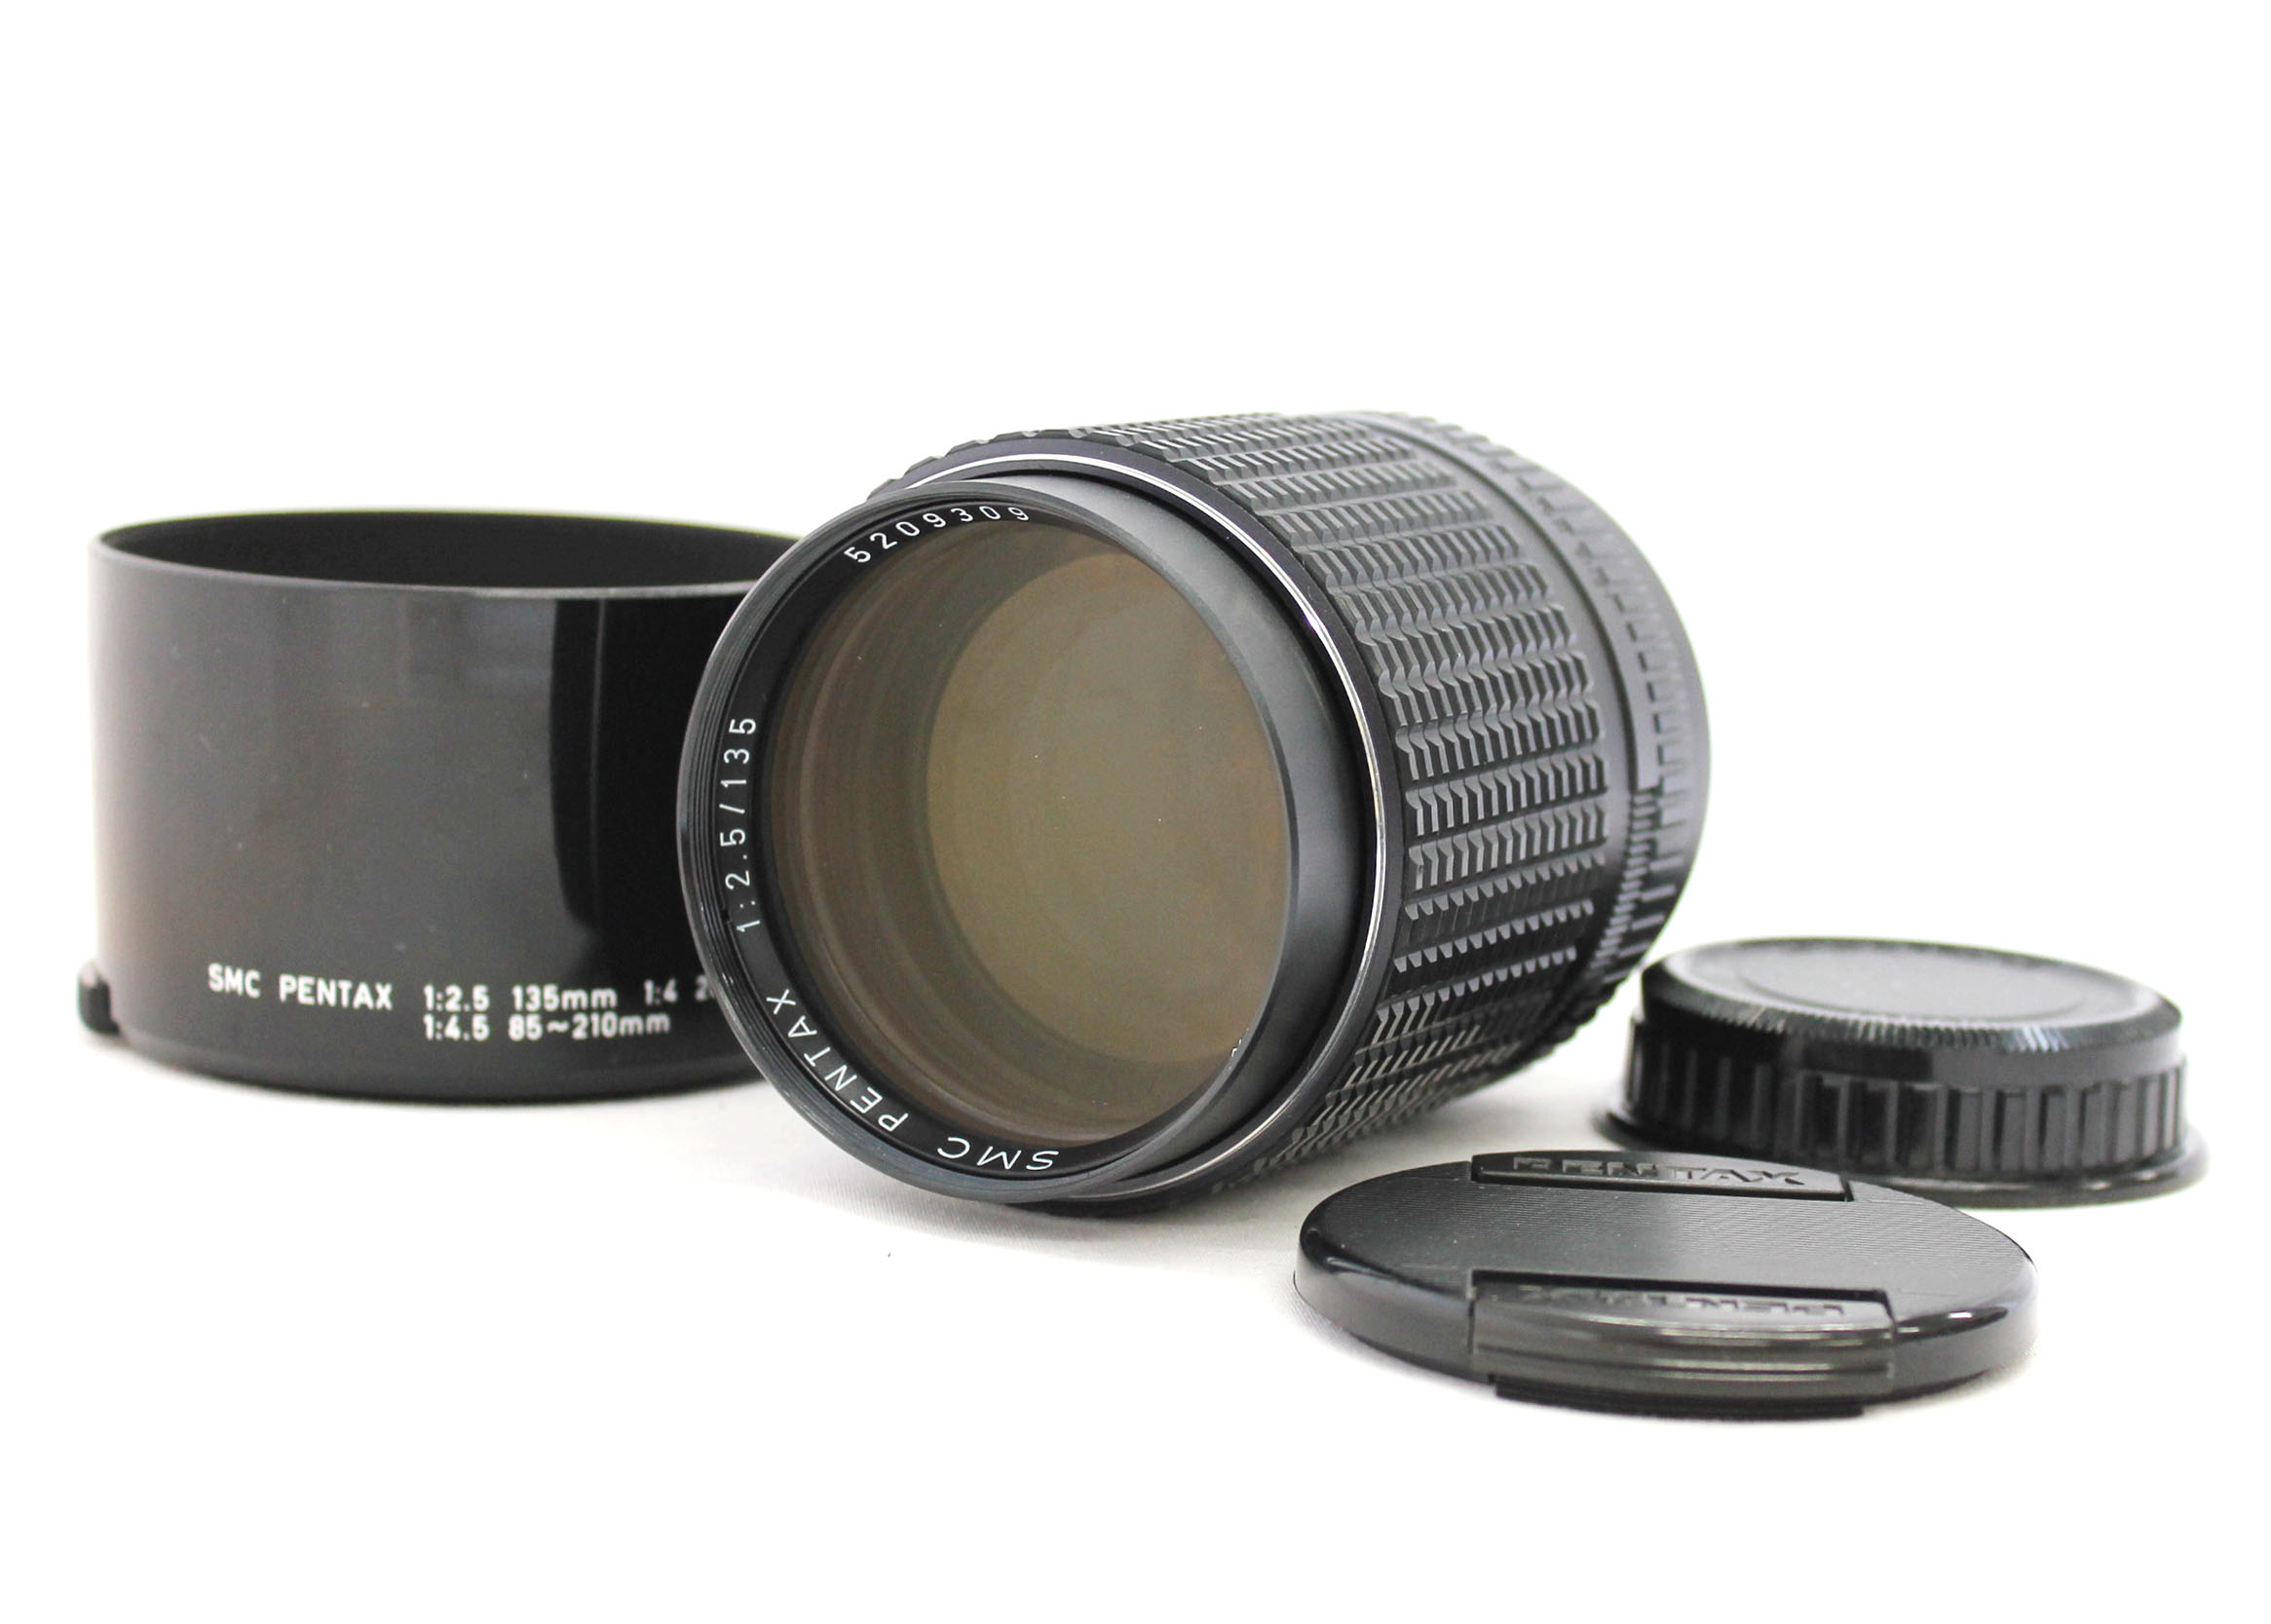  Pentax SMC PENTAX 135mm F/2.5 MF K Mount Lens with Hood from Japan  Photo 0